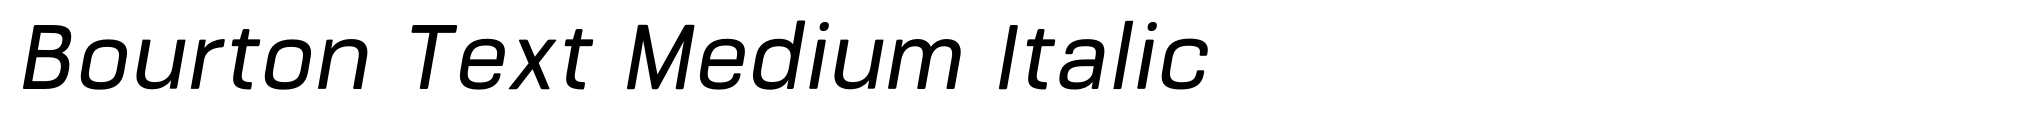 Bourton Text Medium Italic image